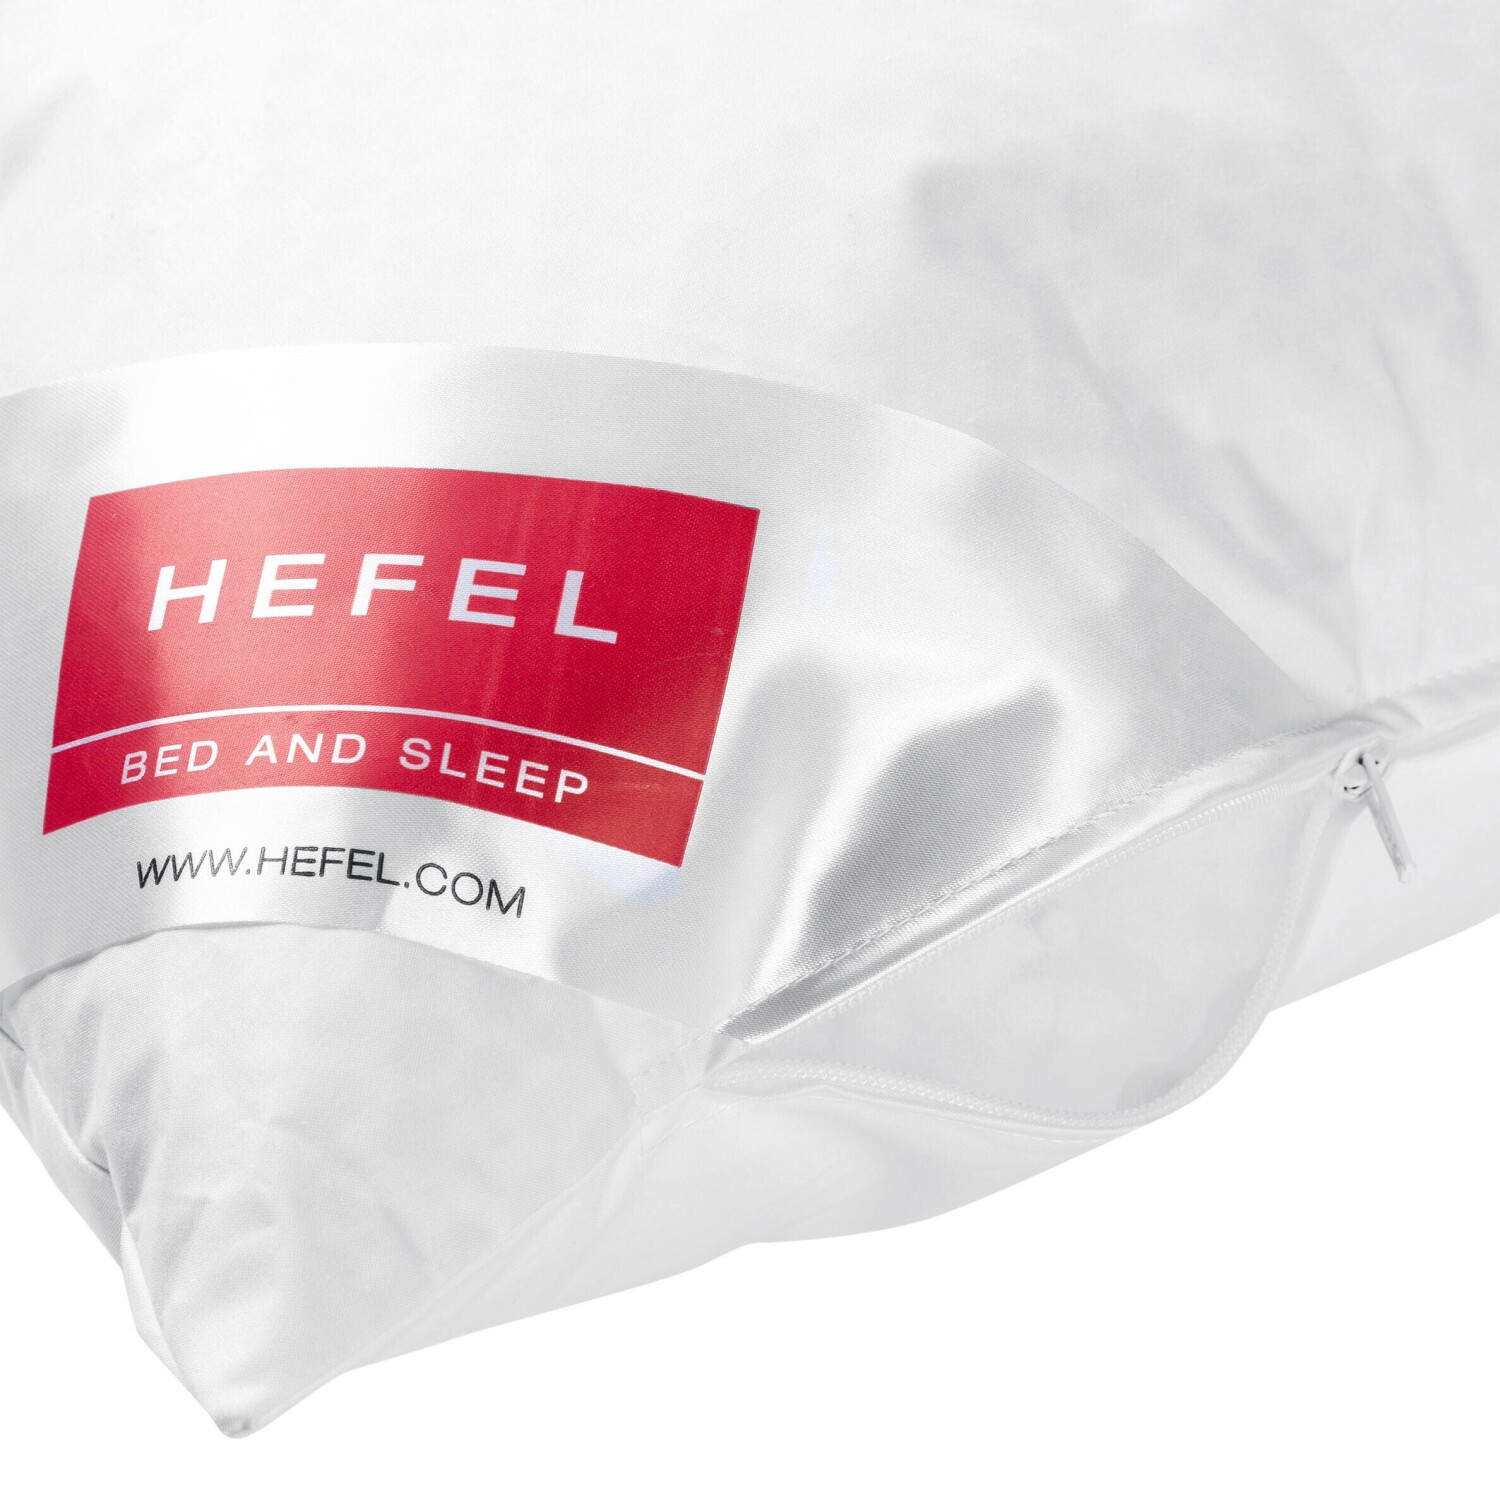 Hefel Cool | 40x60cm 50,37 ab bei Preisvergleich €